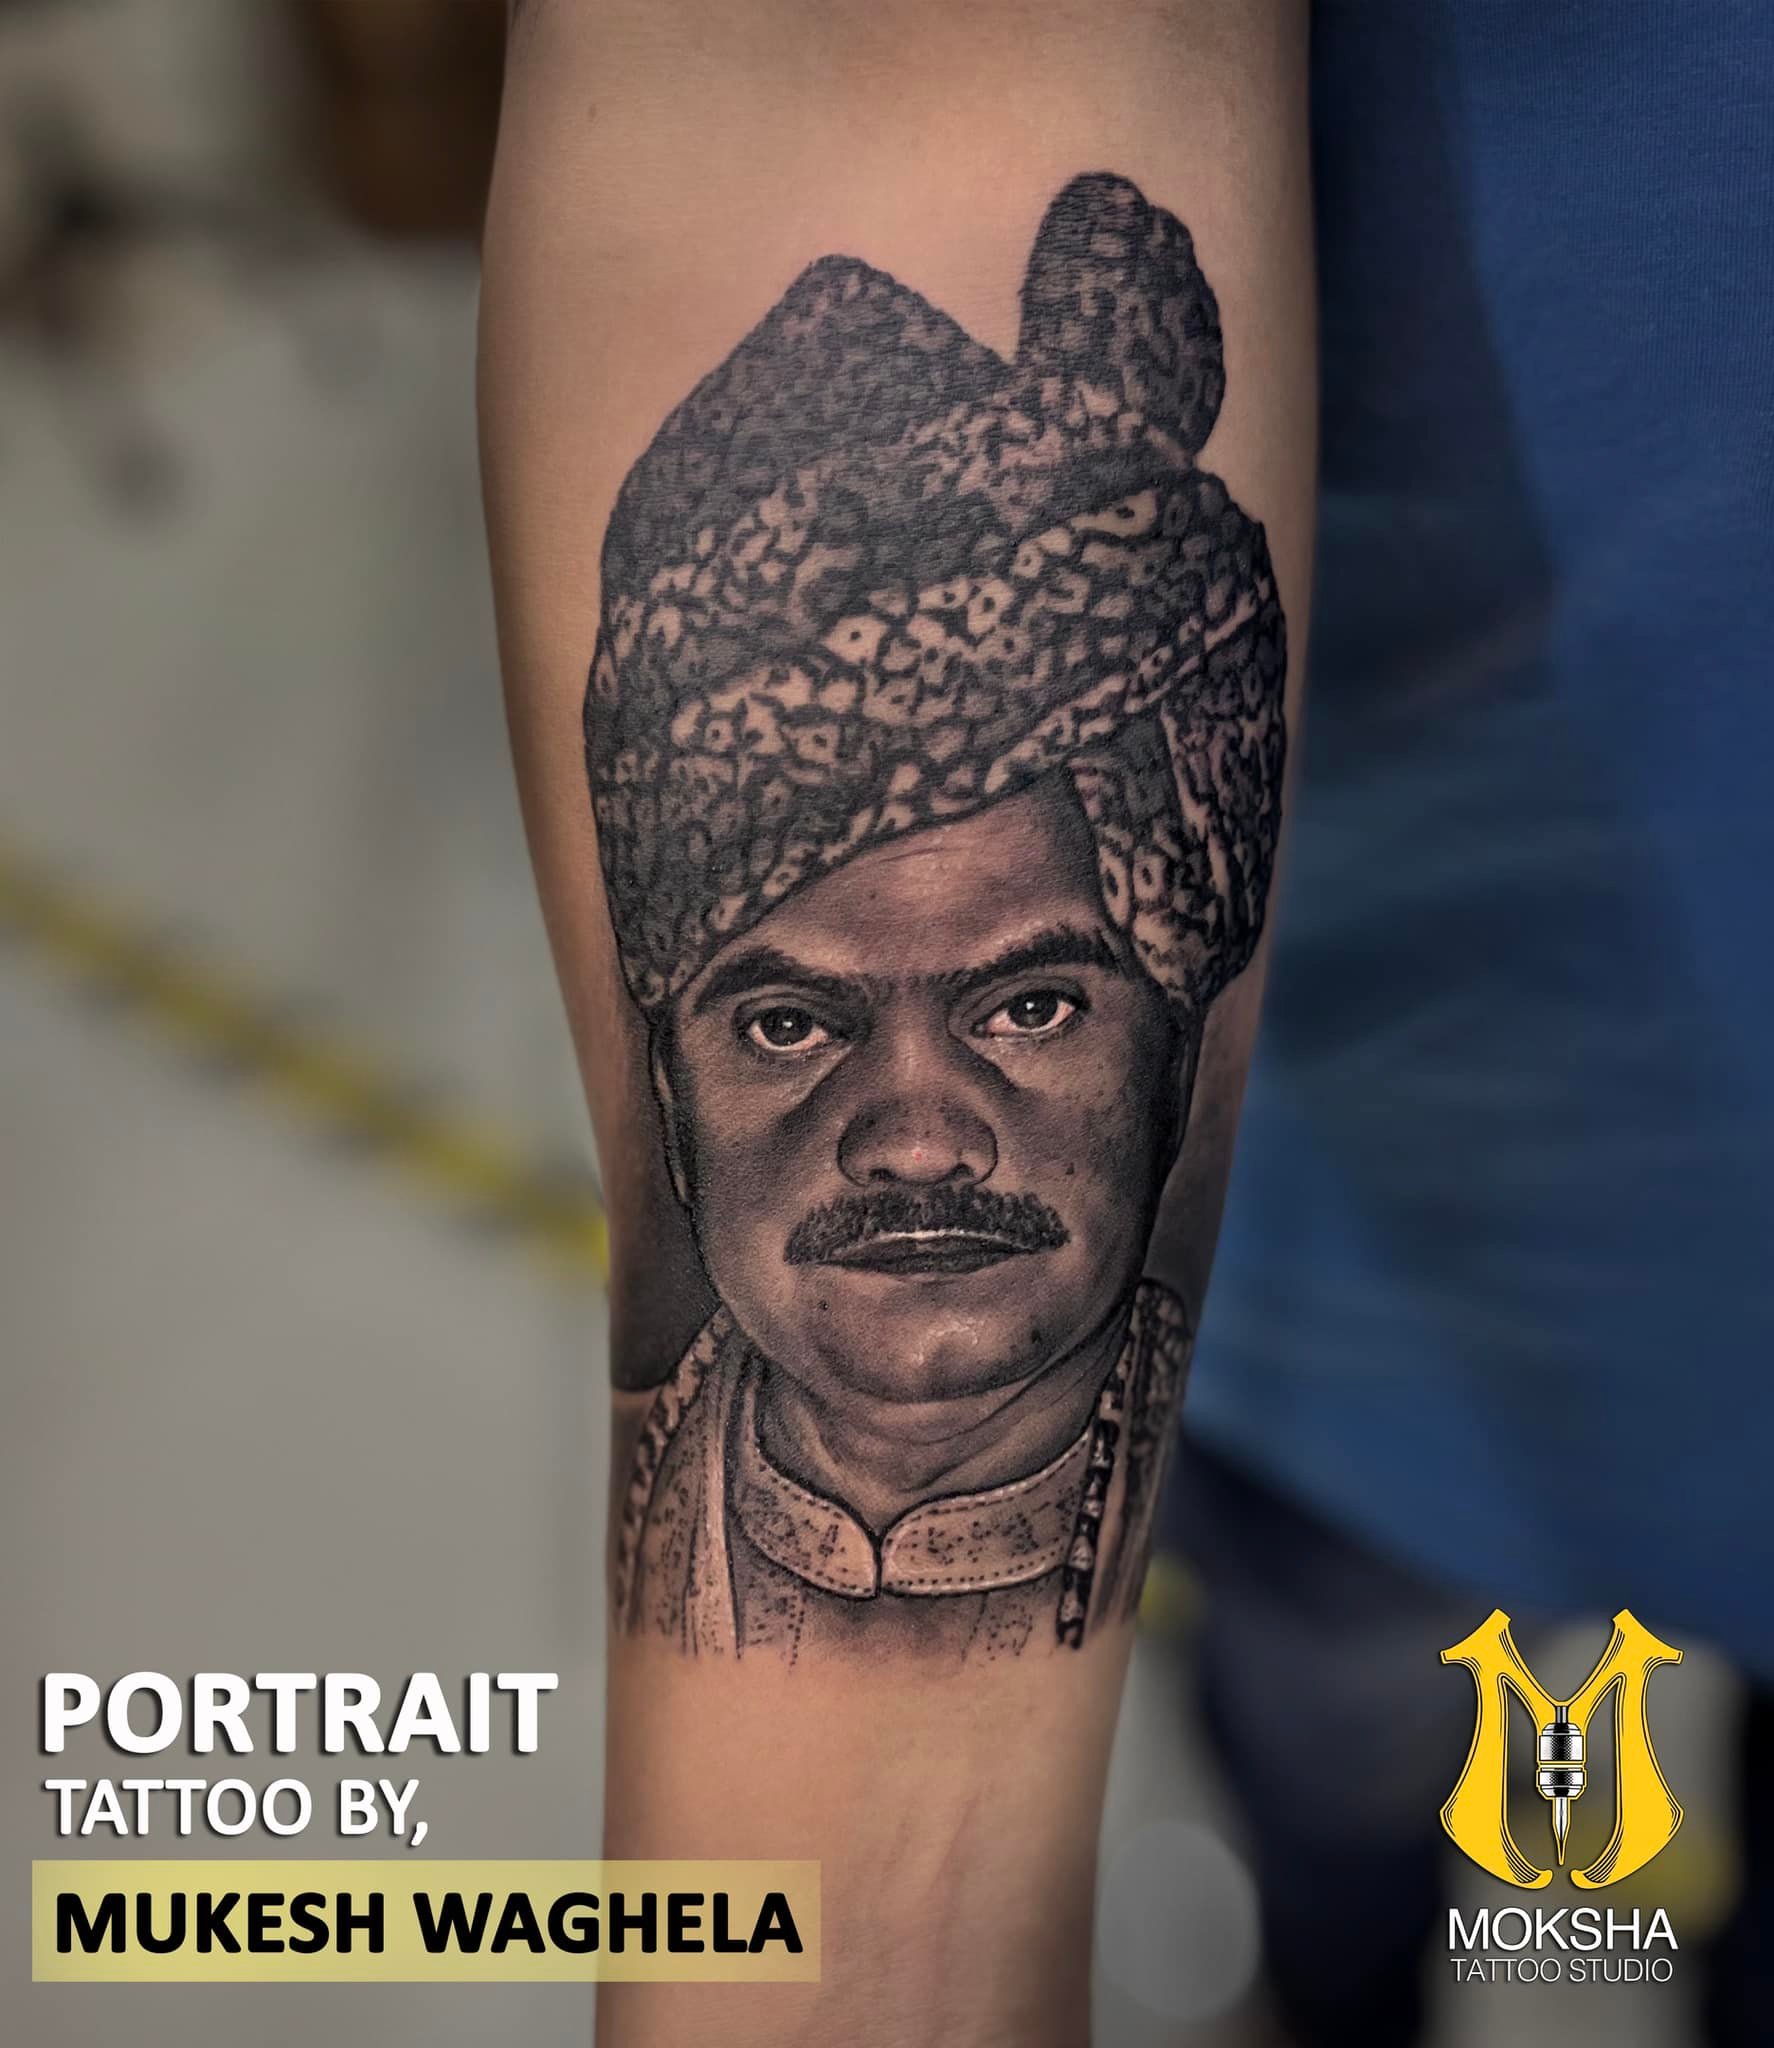 Tattoo always says story | TATTOO GOA in Goa, India